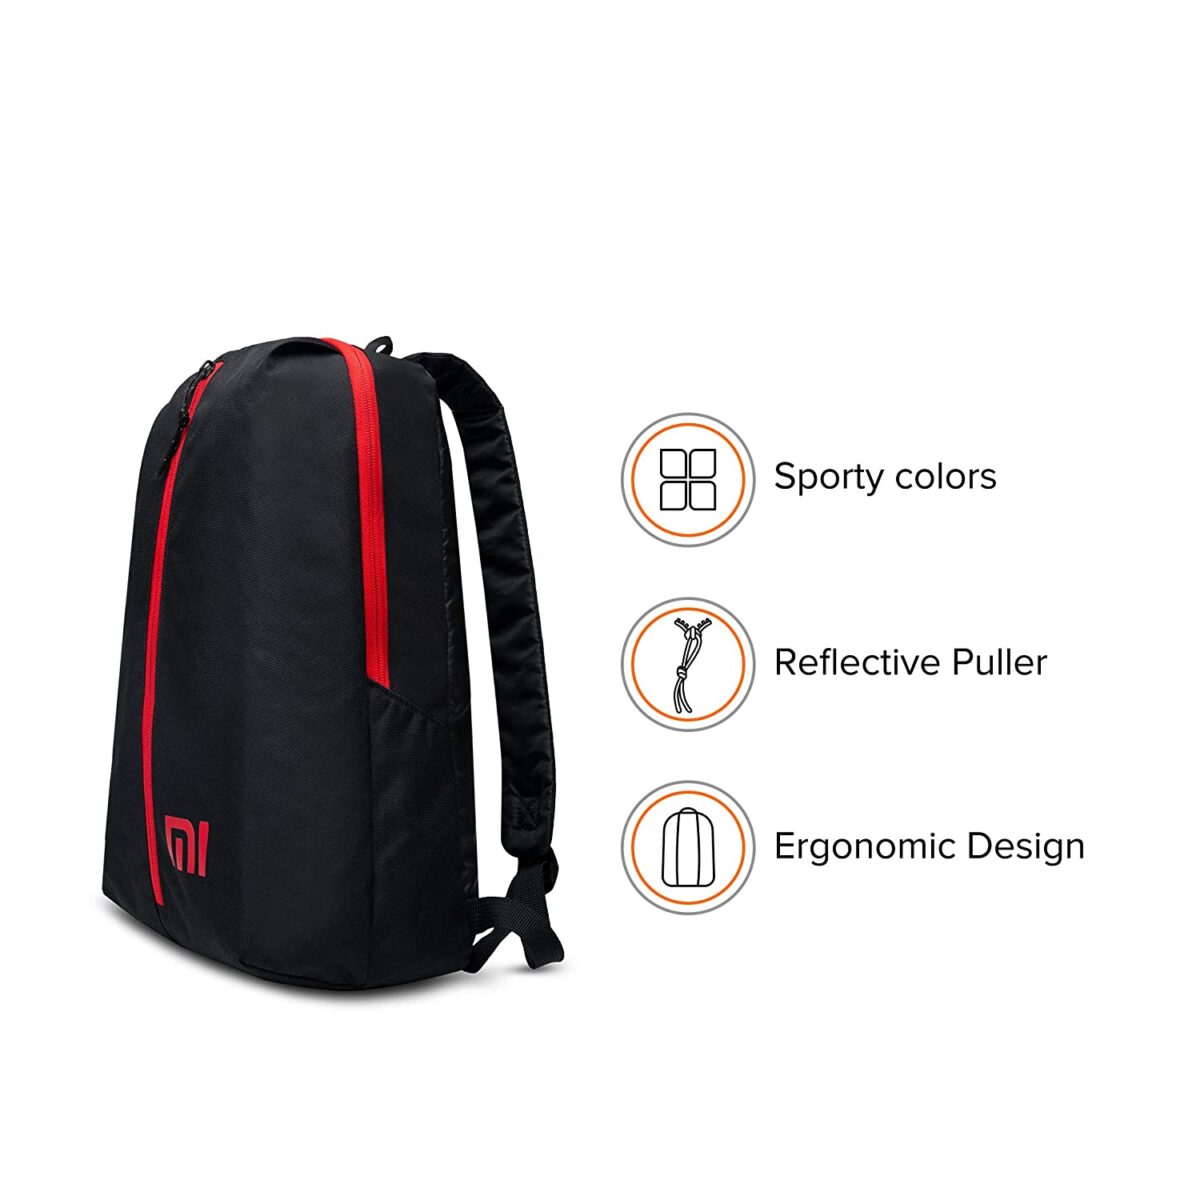 Mi Step Out 12 L Mini Backpack (Black)